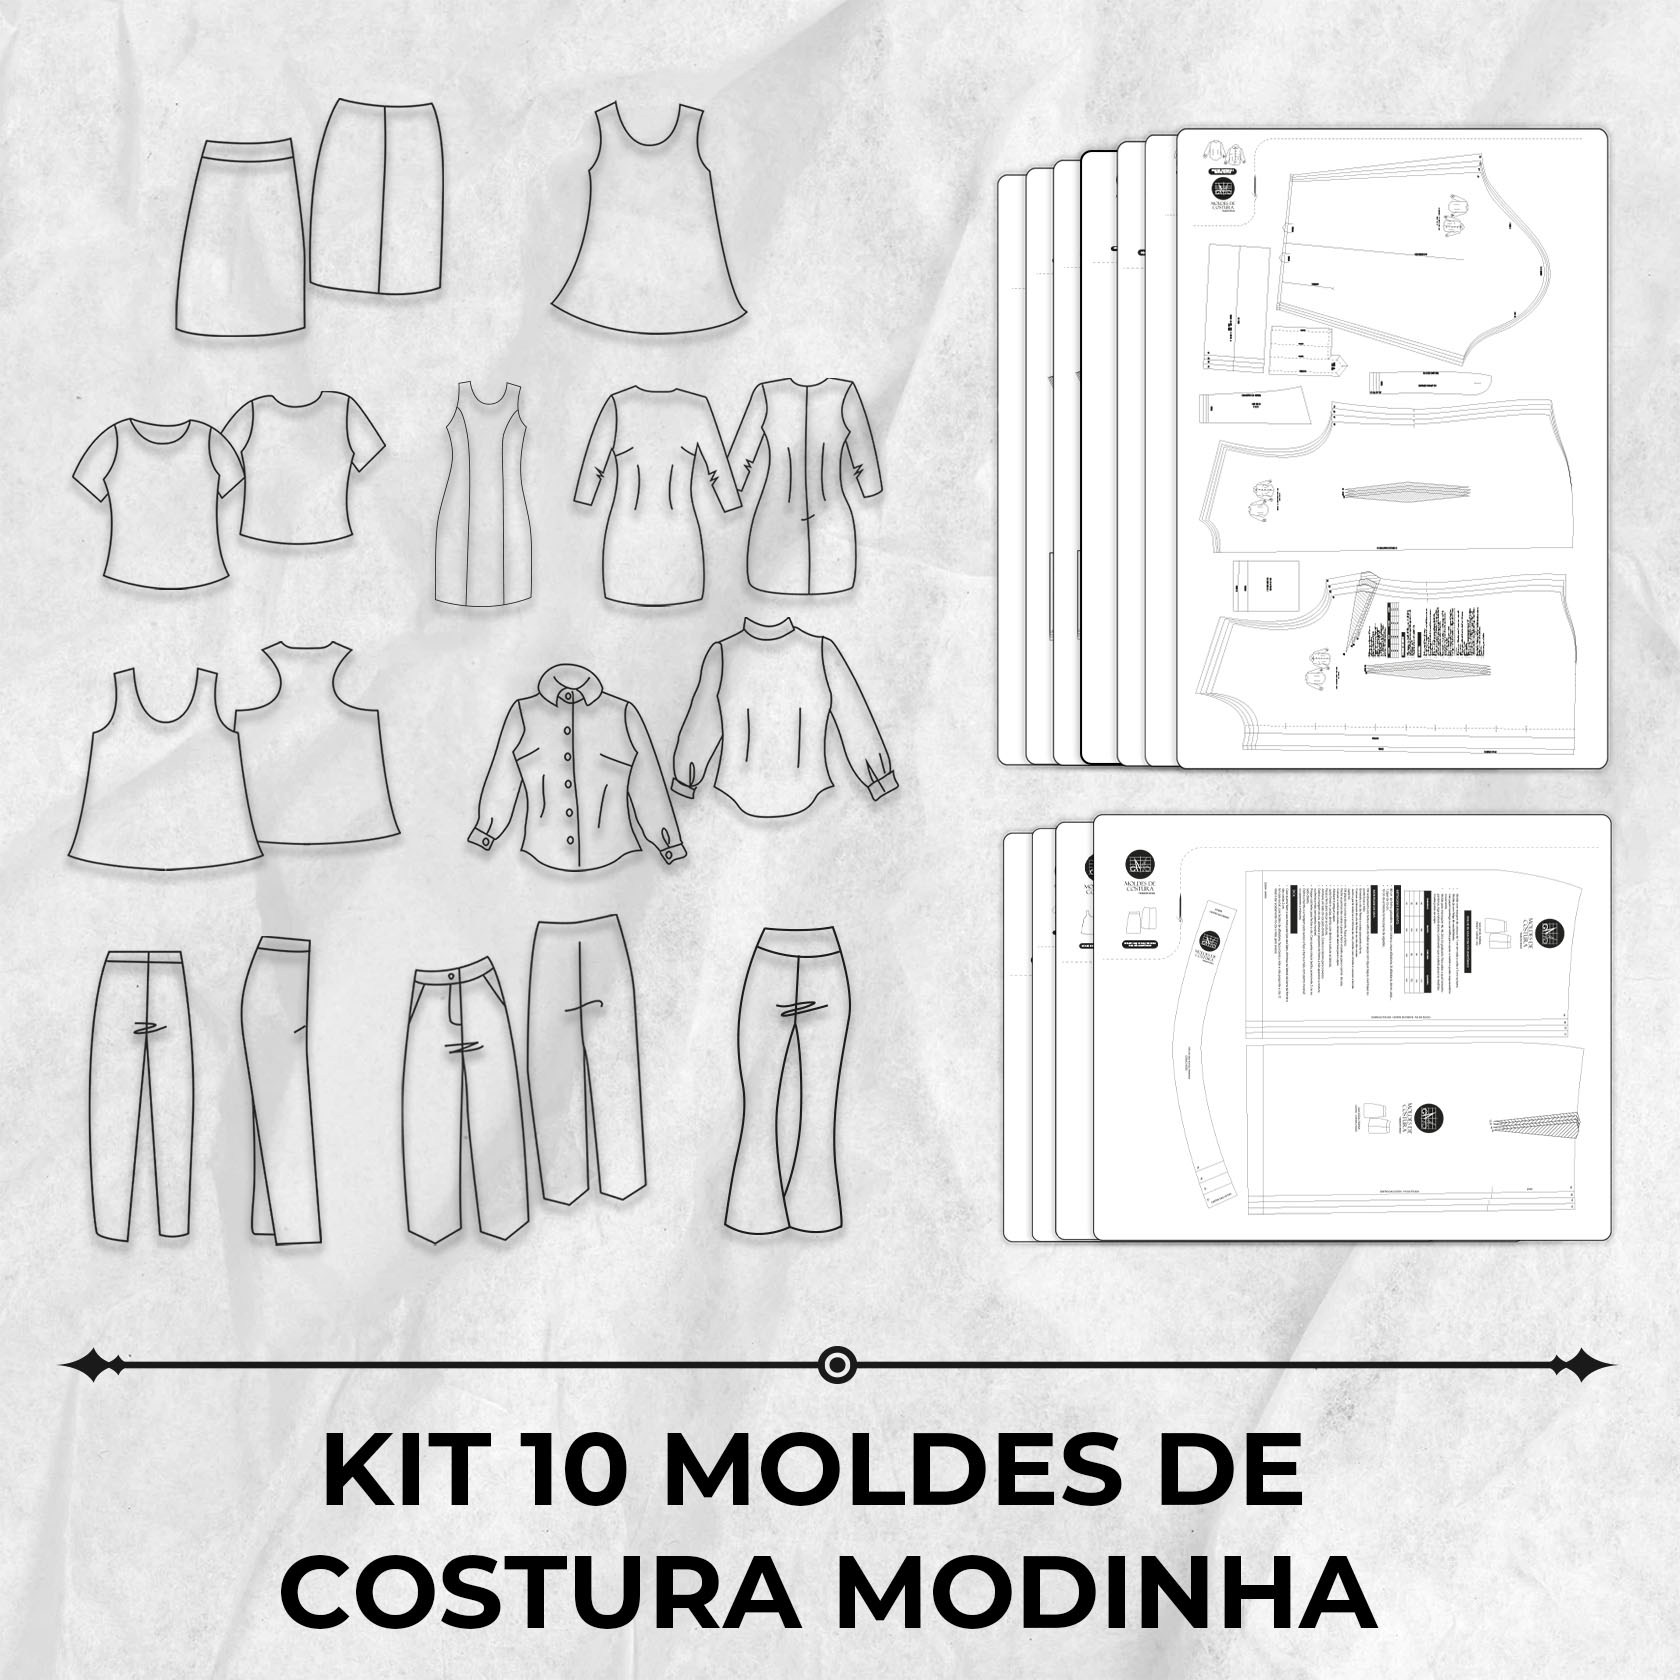 Kit 10 moldes de costura modinha by Marlene Mukai